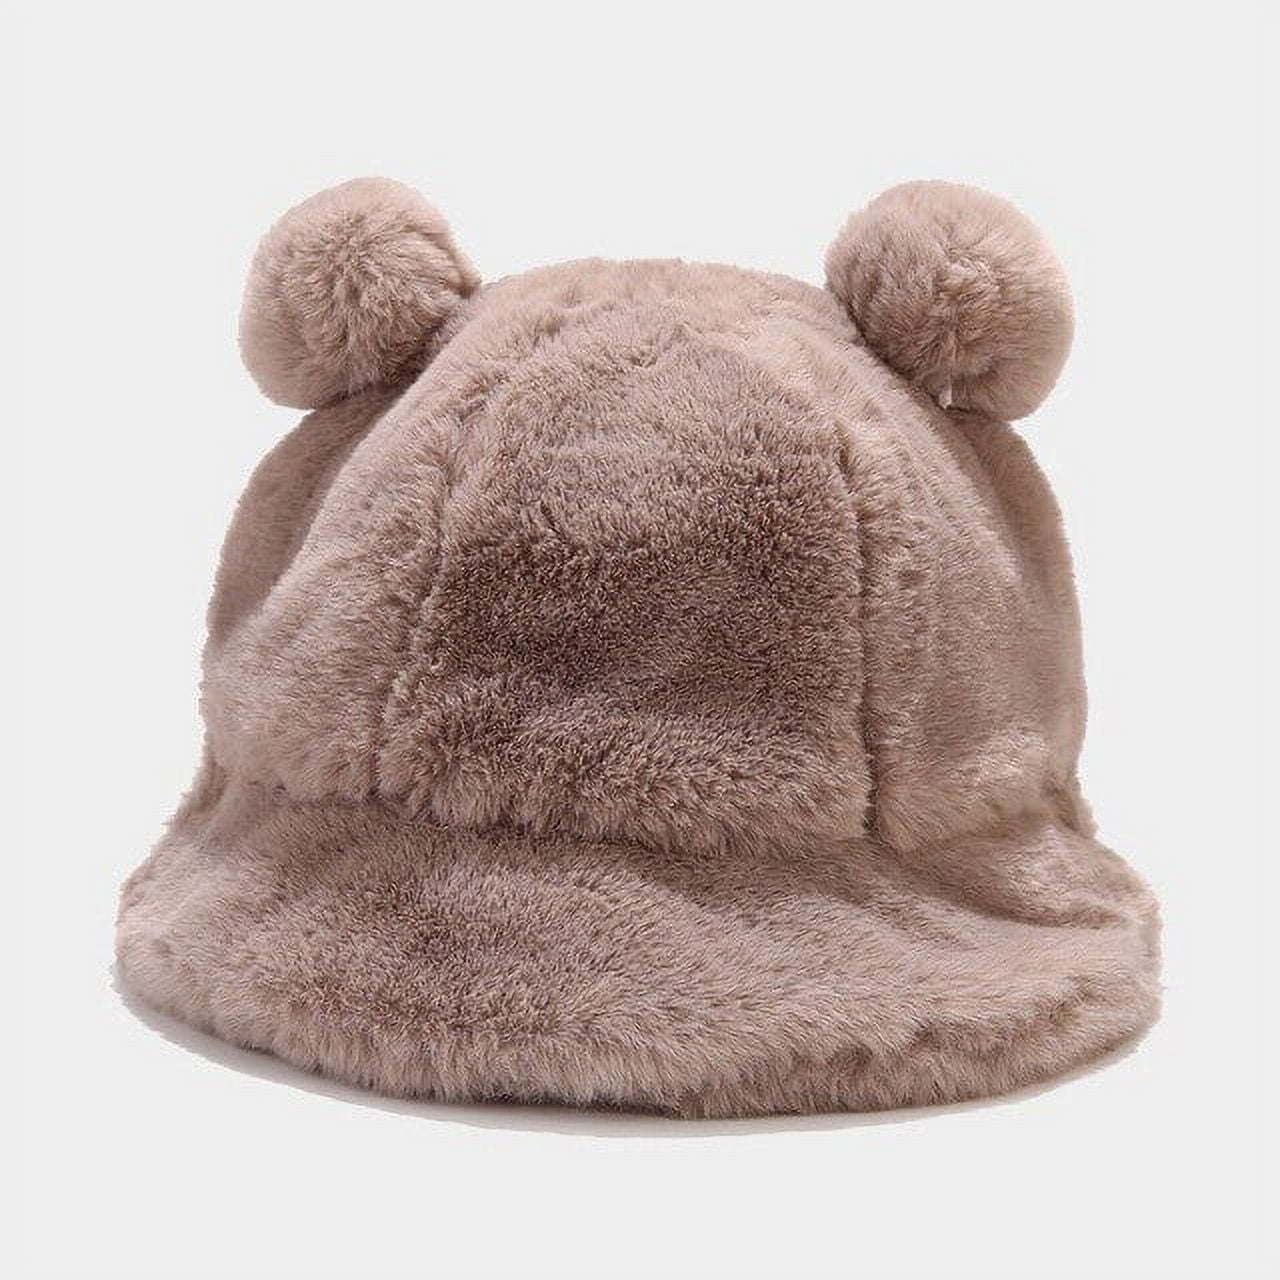 Plush Faux Fur Animal Rat Hat Cap Soft Warm Winter Headwear Fun Cute Beanie  Hat Fleece Lining